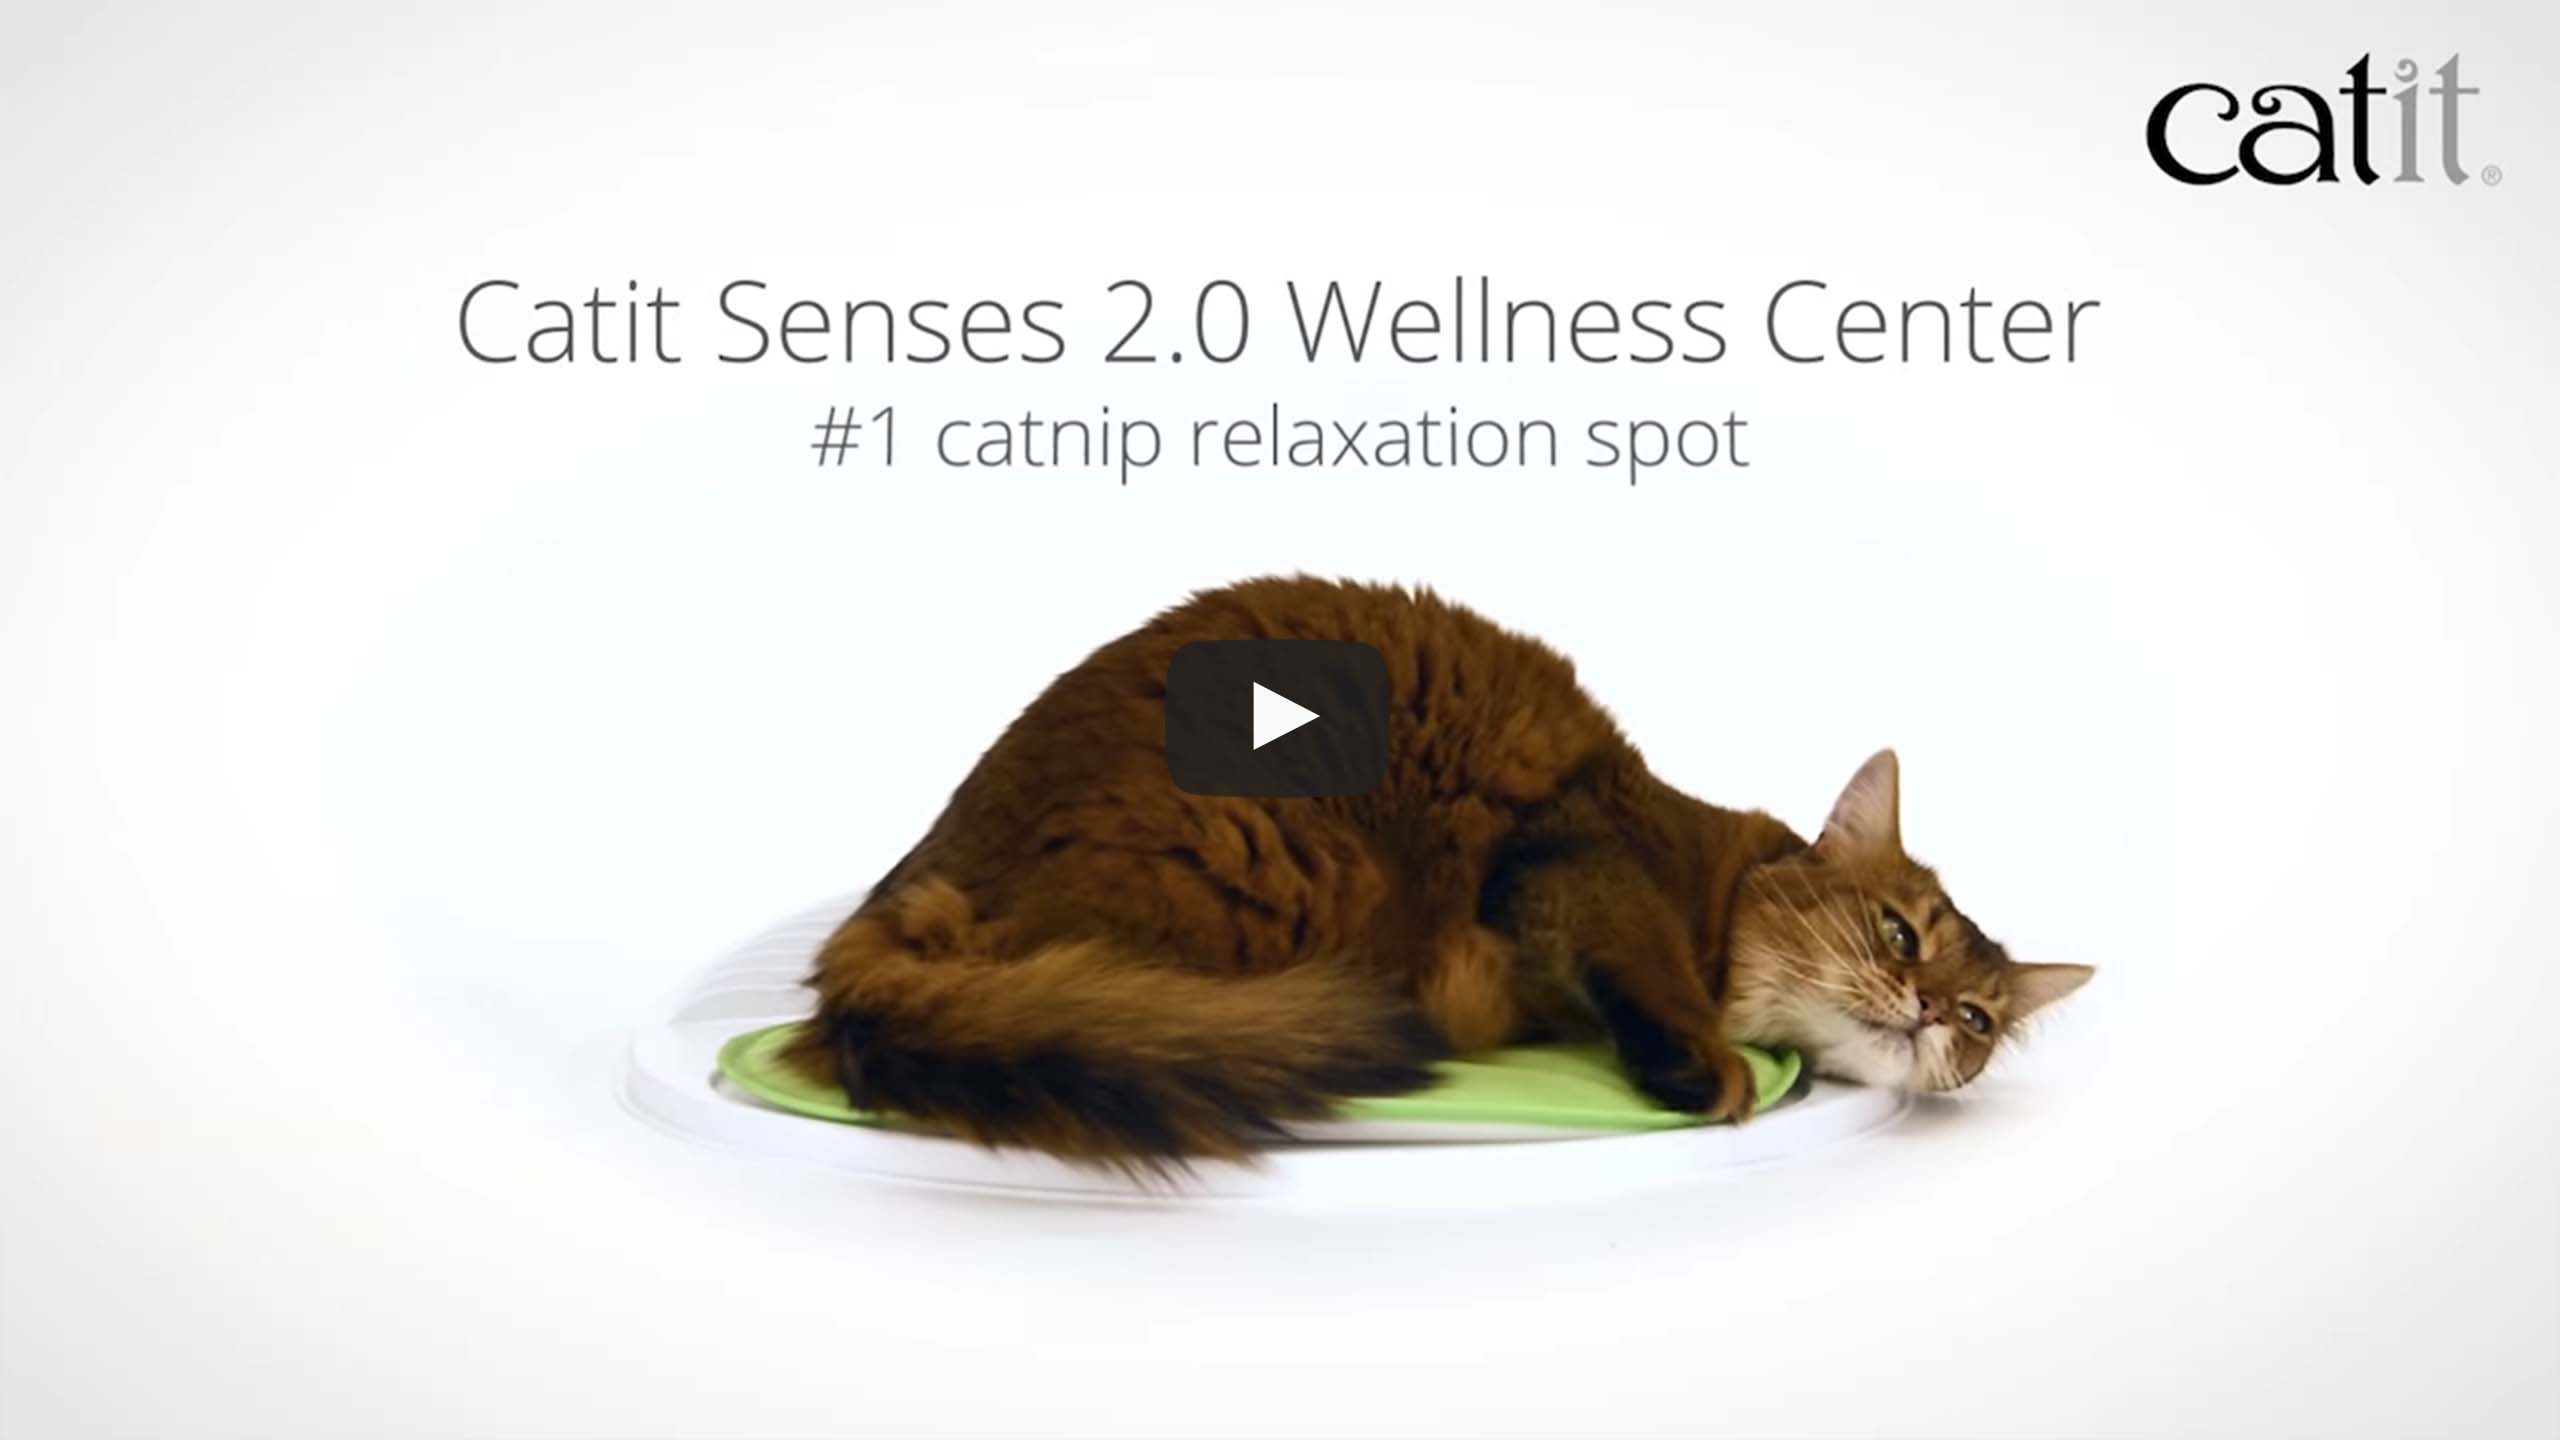 Video: Catit Senses Wellness Center